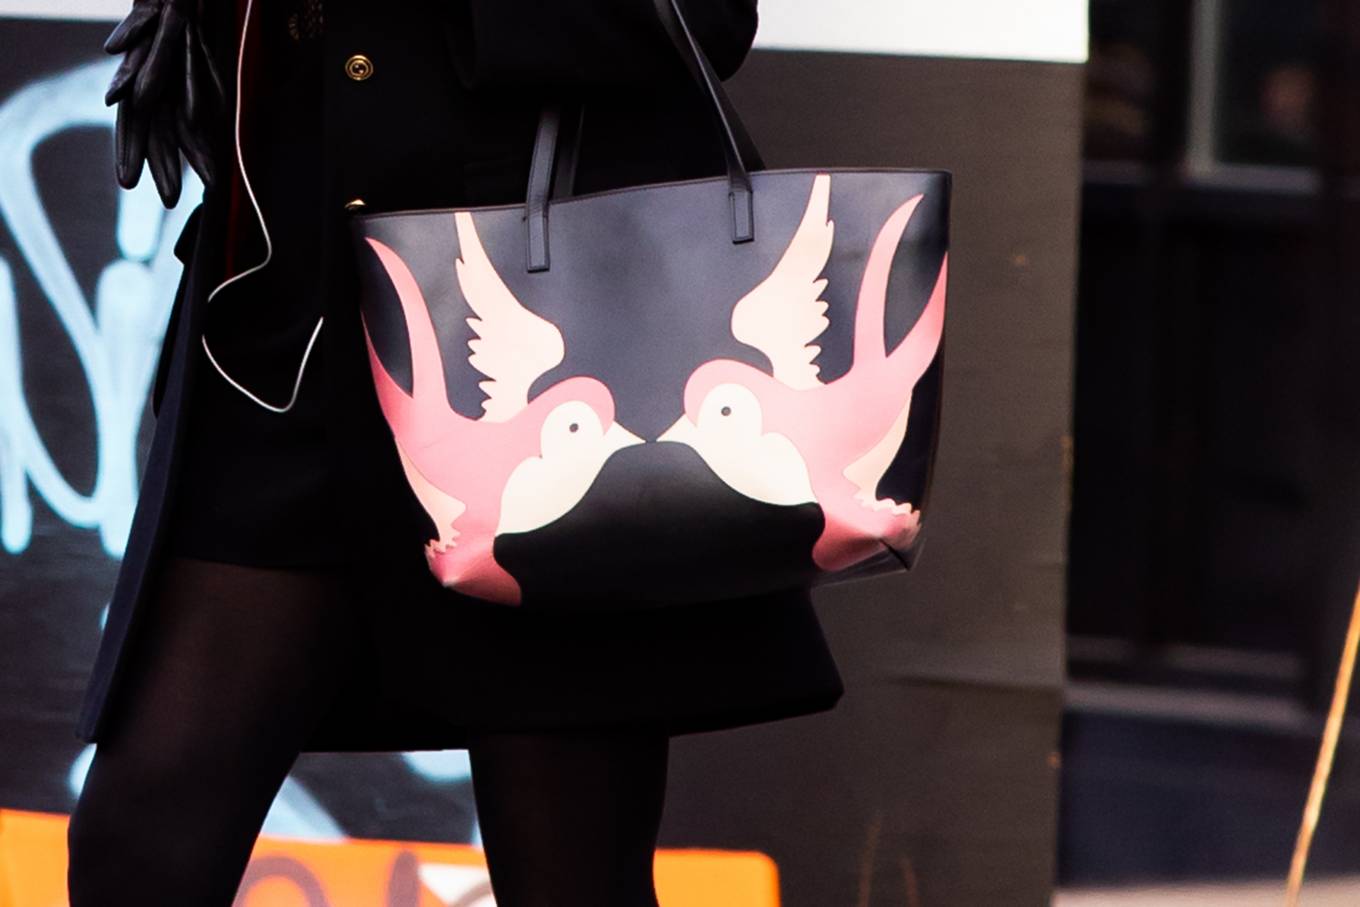 Famke Janssen 2022 : Famke Janssen – Spotted in New York walking with iPhone and bird handbag-01